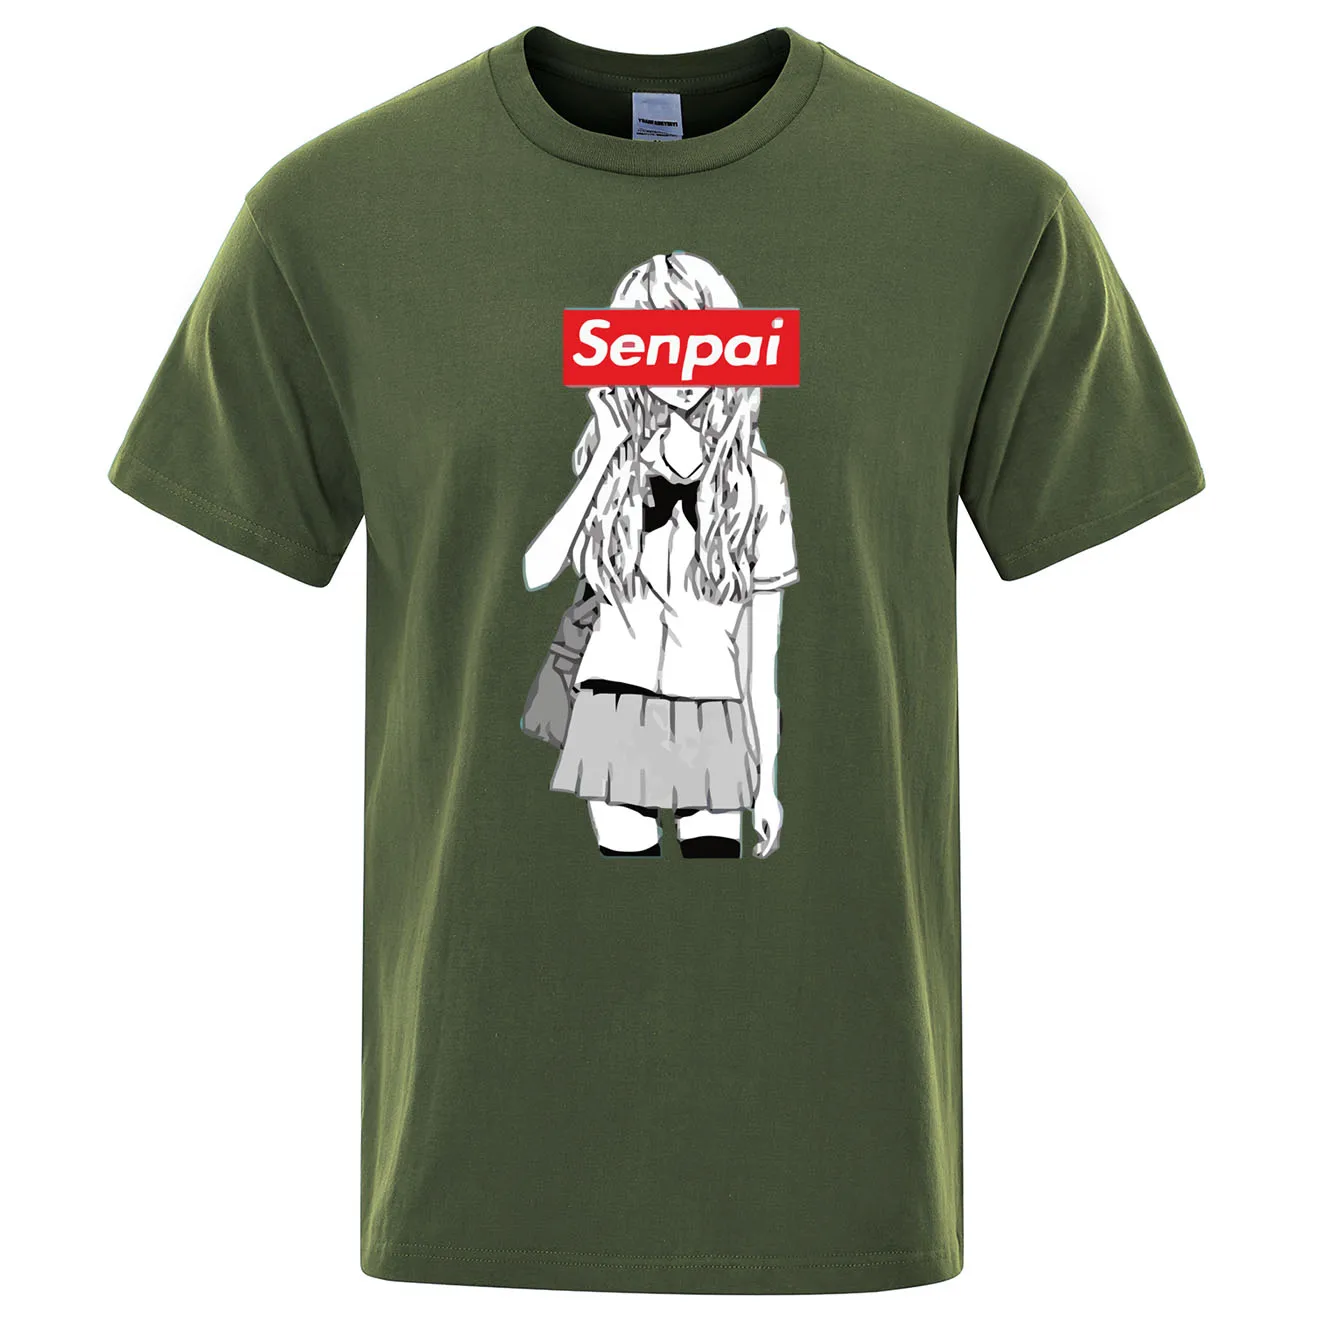 Senpai Anime Girl Nerdy Print T Shirt Summer Cotton Men's T-shirt Manga Streetwear Tee Tshirt Unisex Harajuku Clothes Tops Tees